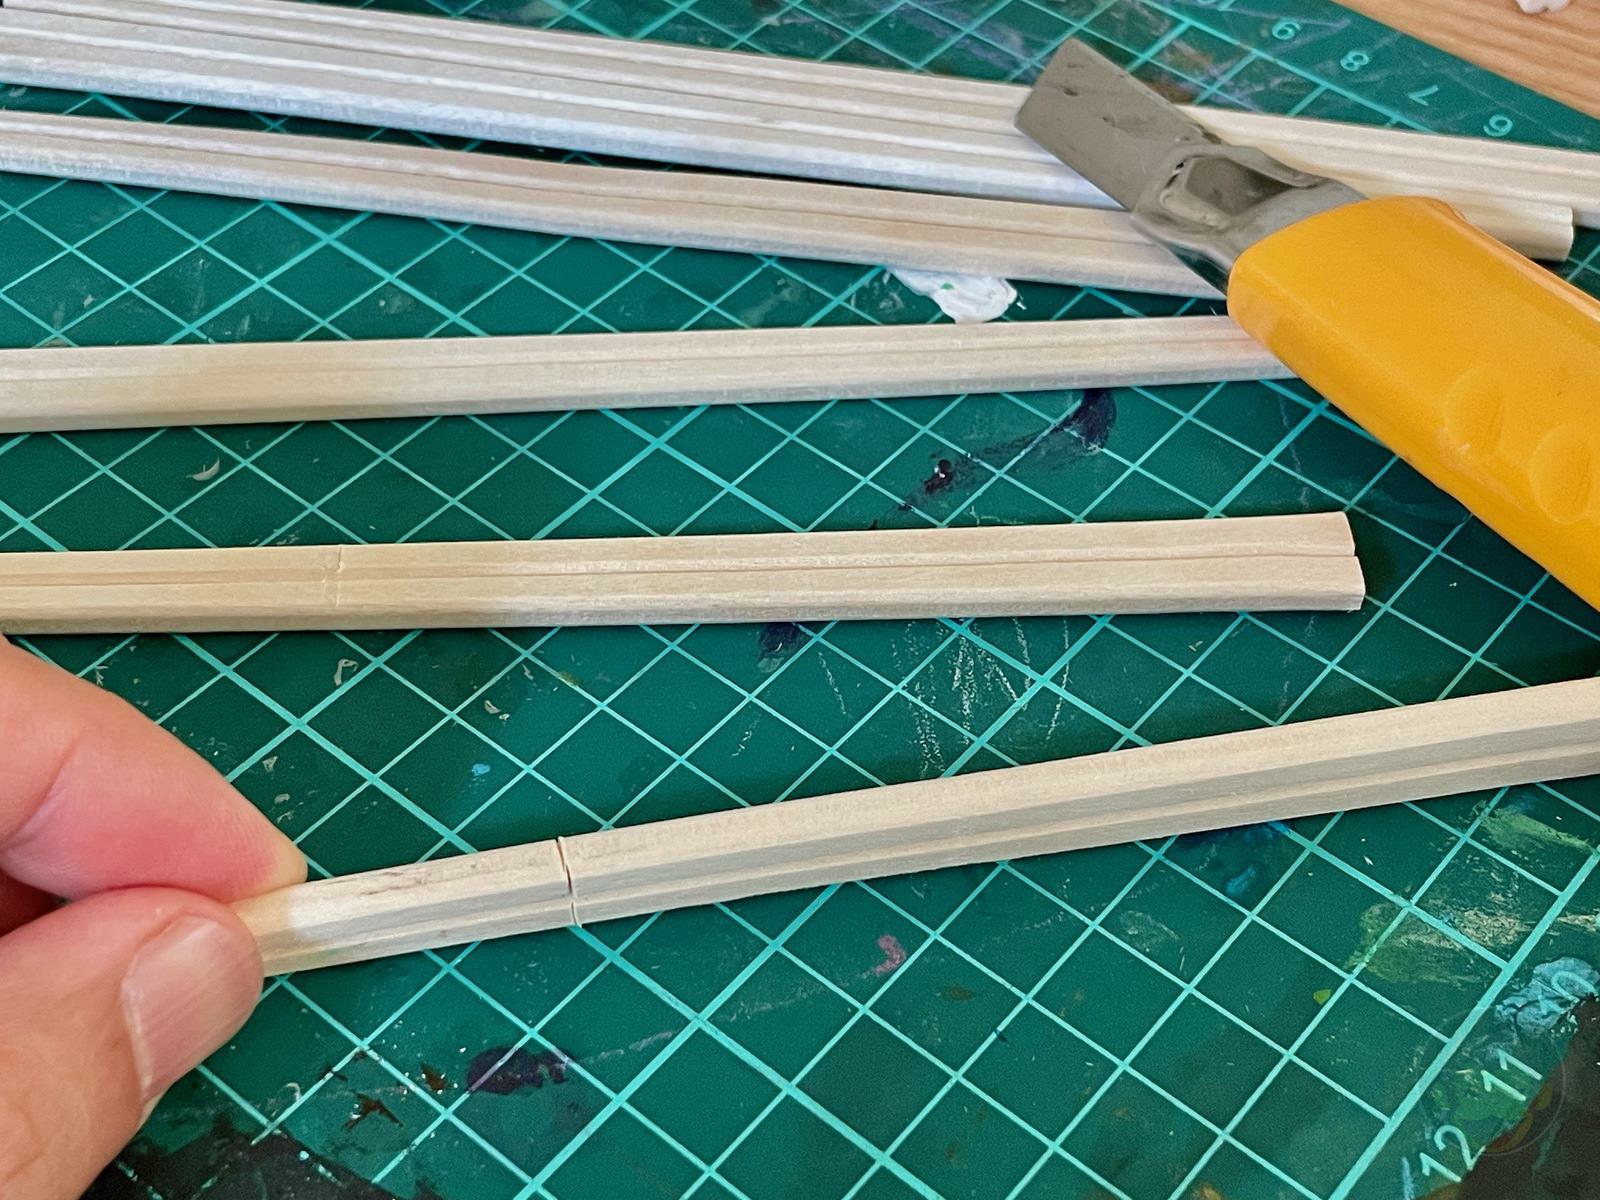 Building-a-Bench-with-chopsticks-01.jpg